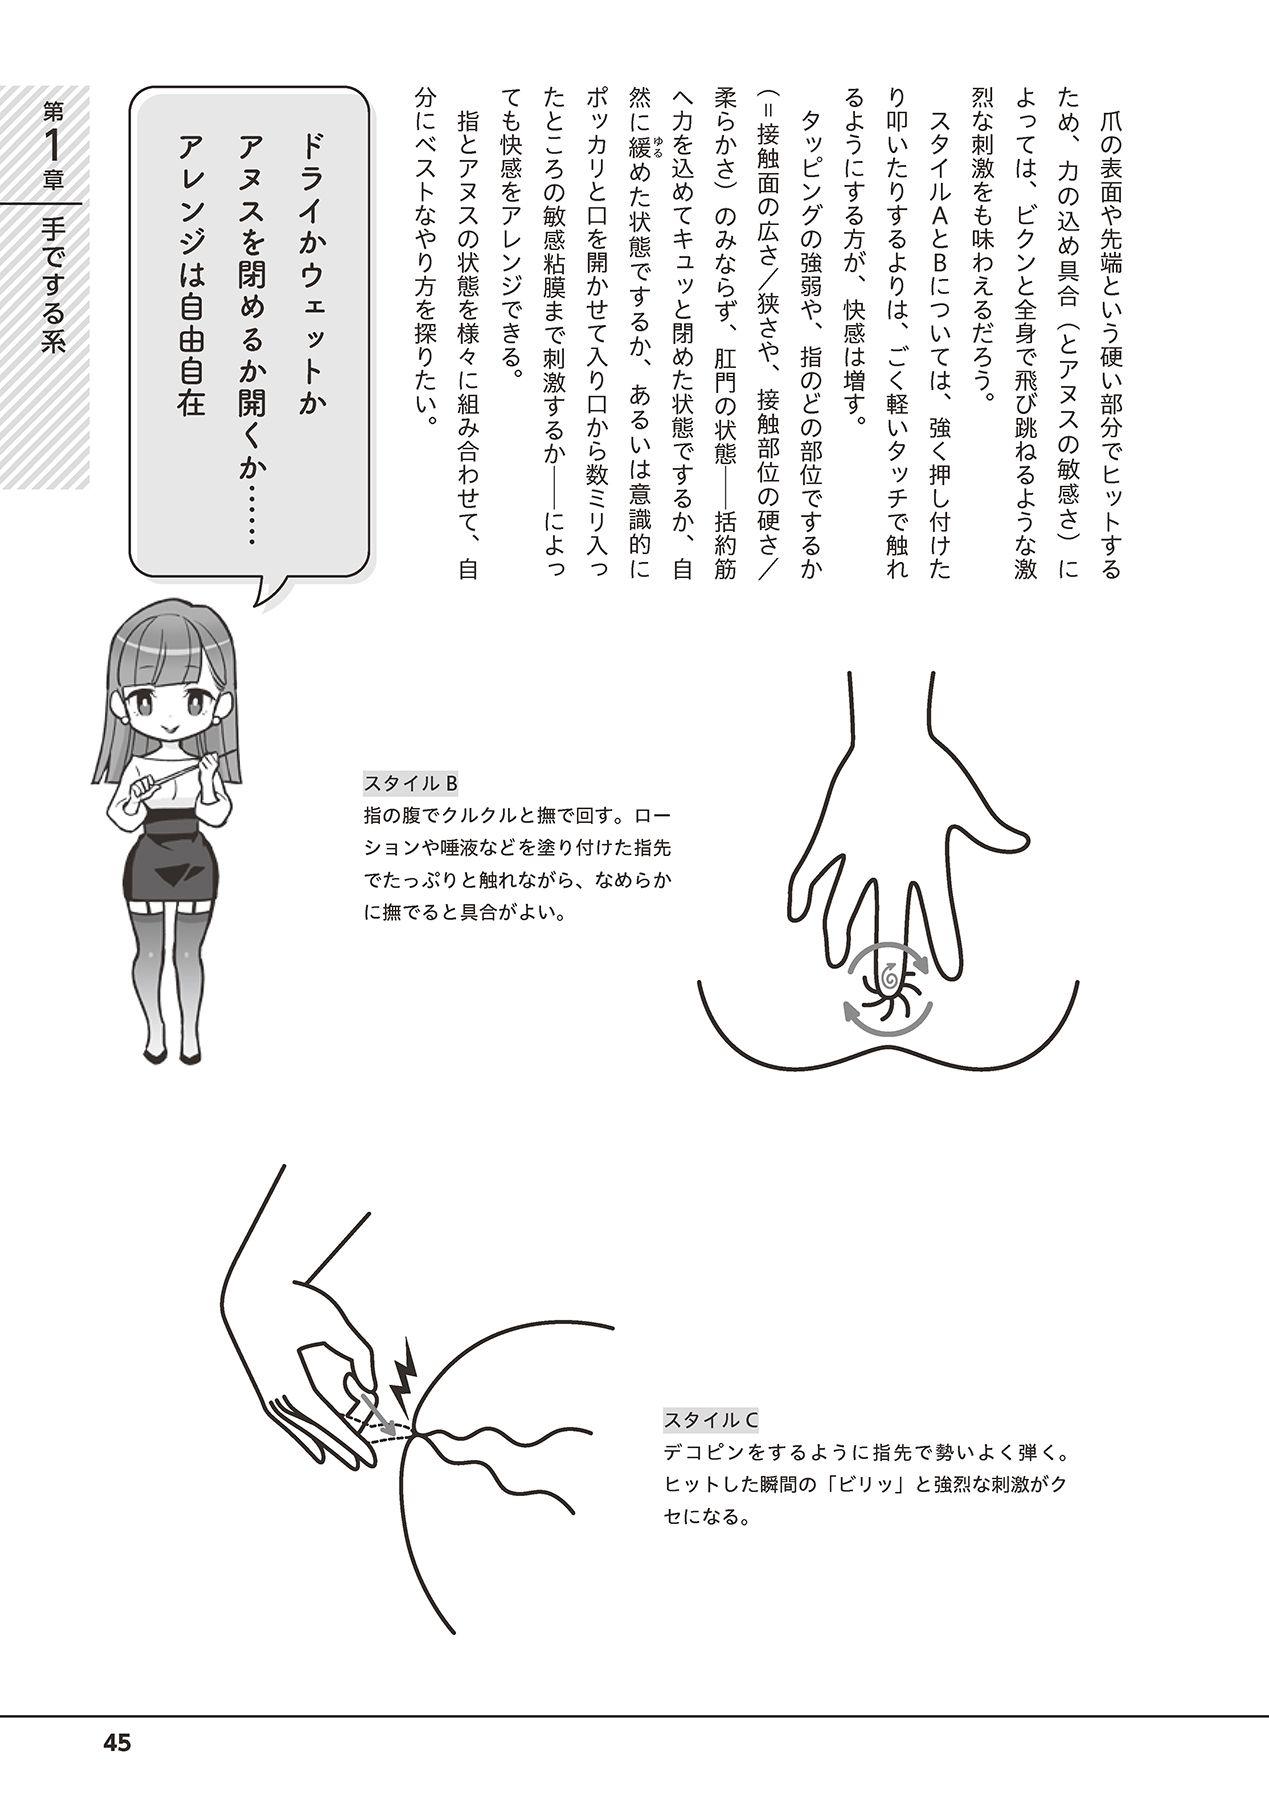 Otoko no Jii Onanie Kanzen Manual Illustration Han...... Onanie Play 46